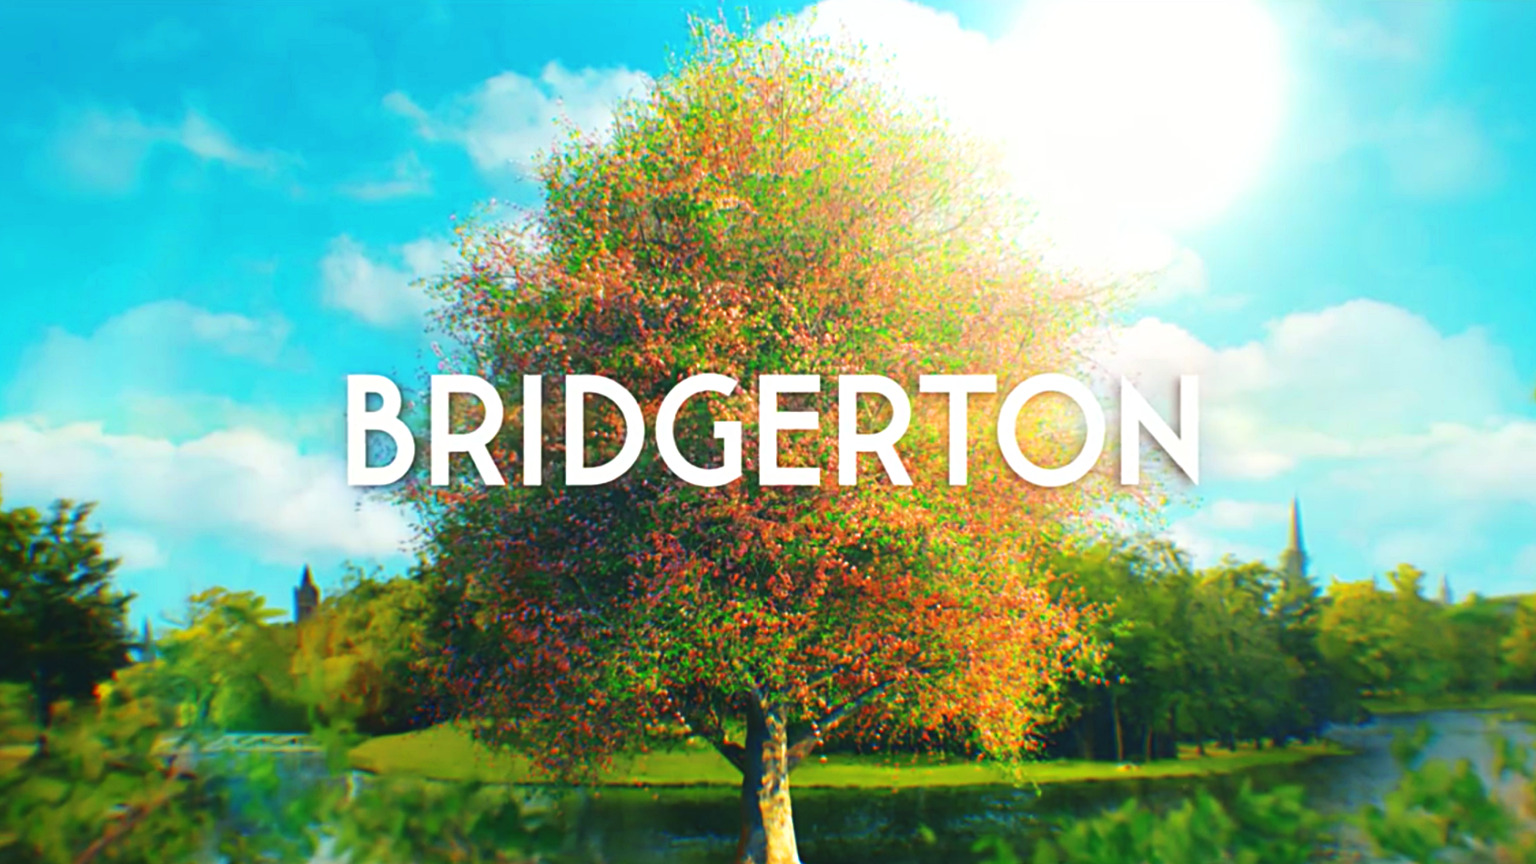 Bridgerton